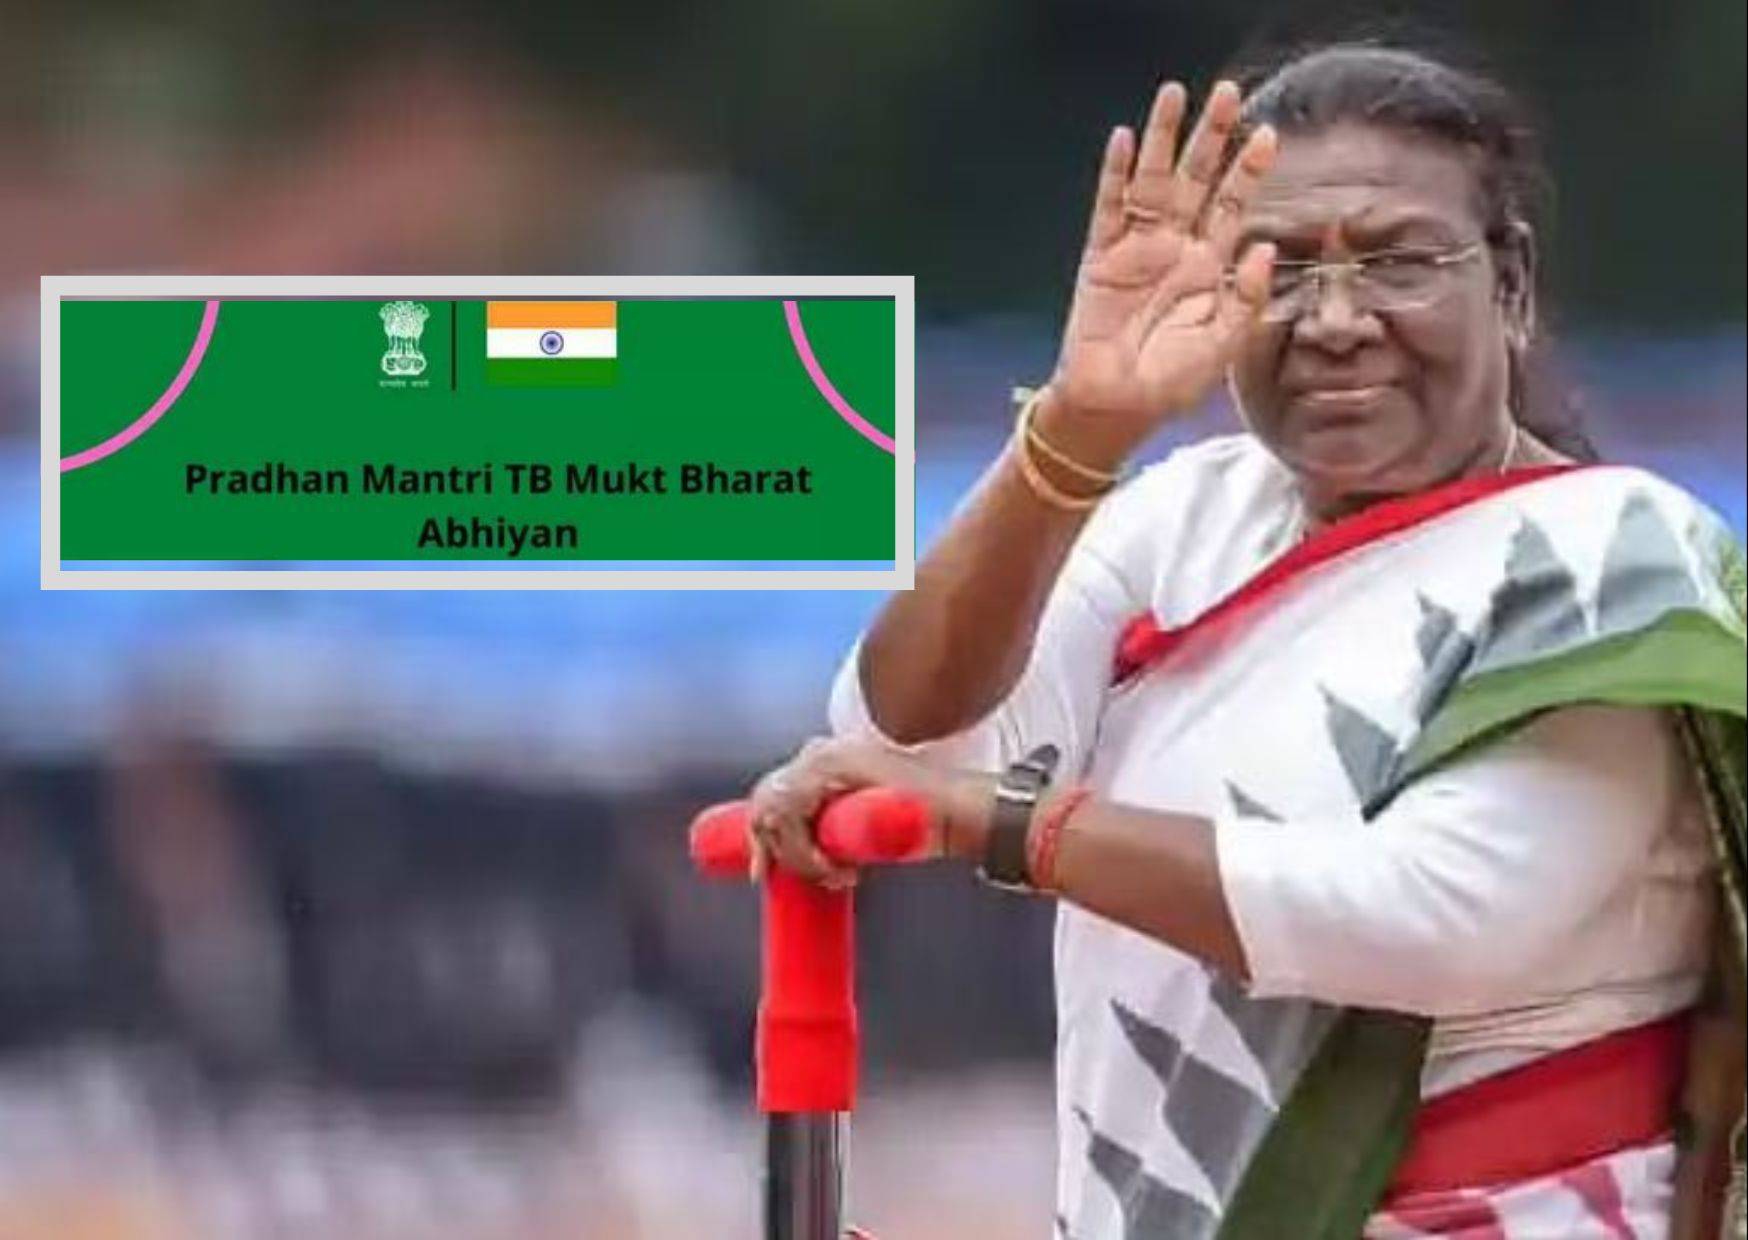 President of India to launch Pradhan Mantri TB Mukt Bharat Abhiyaan on 9th September